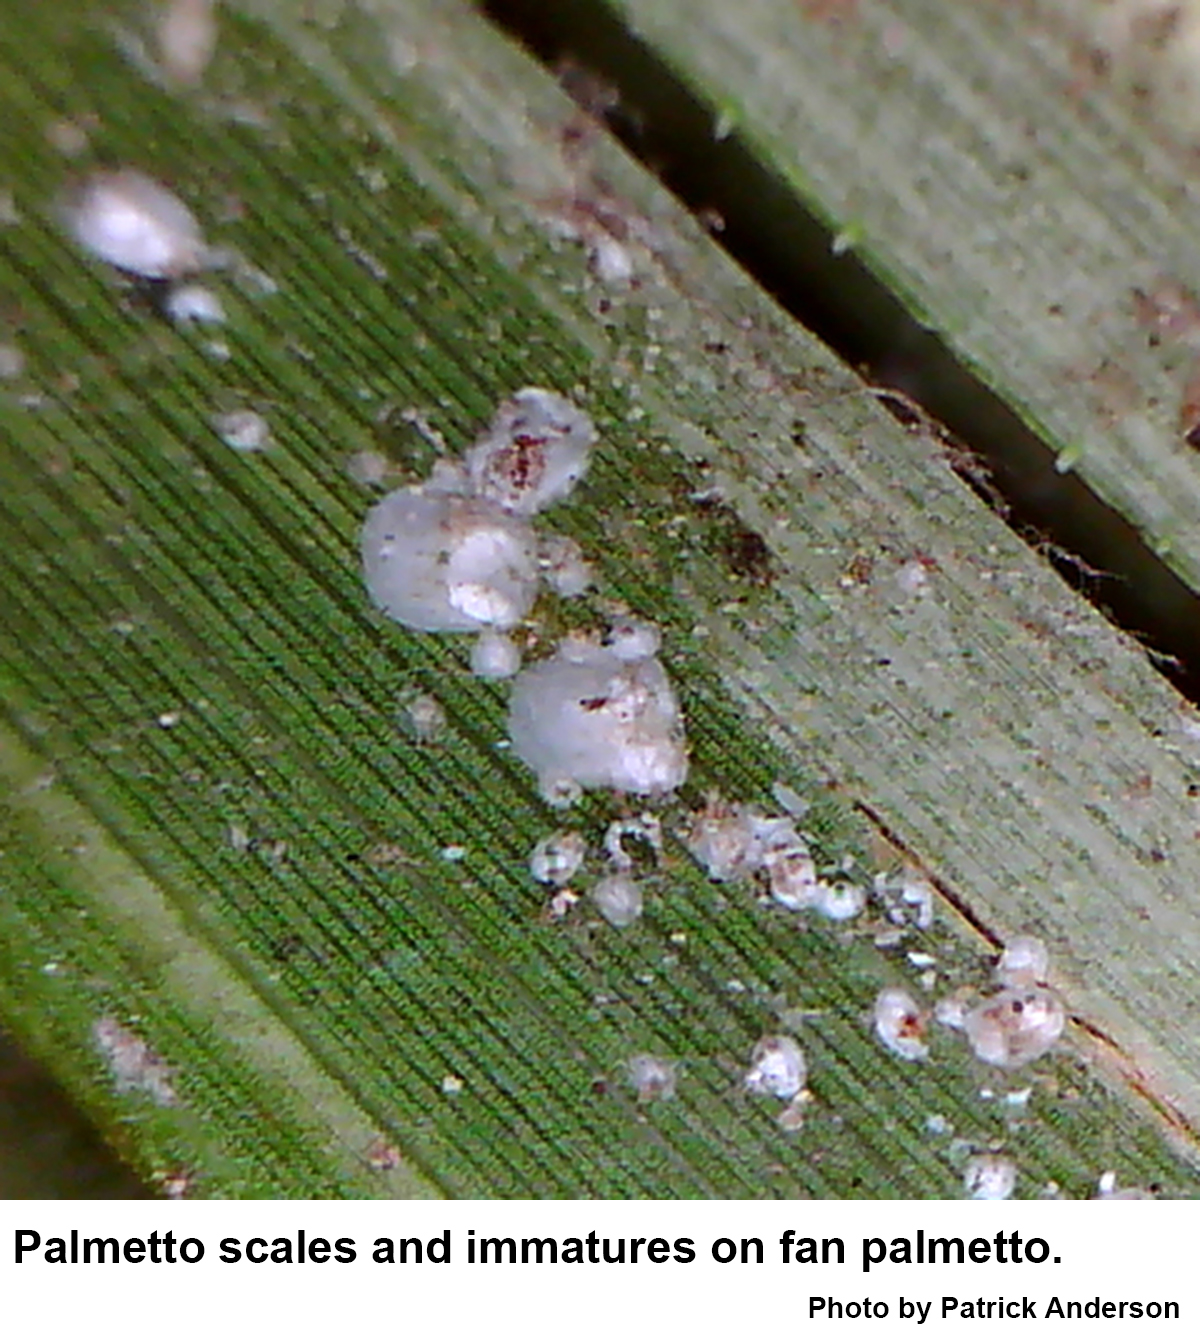 Palmetto scales and immatures on fan palmetto